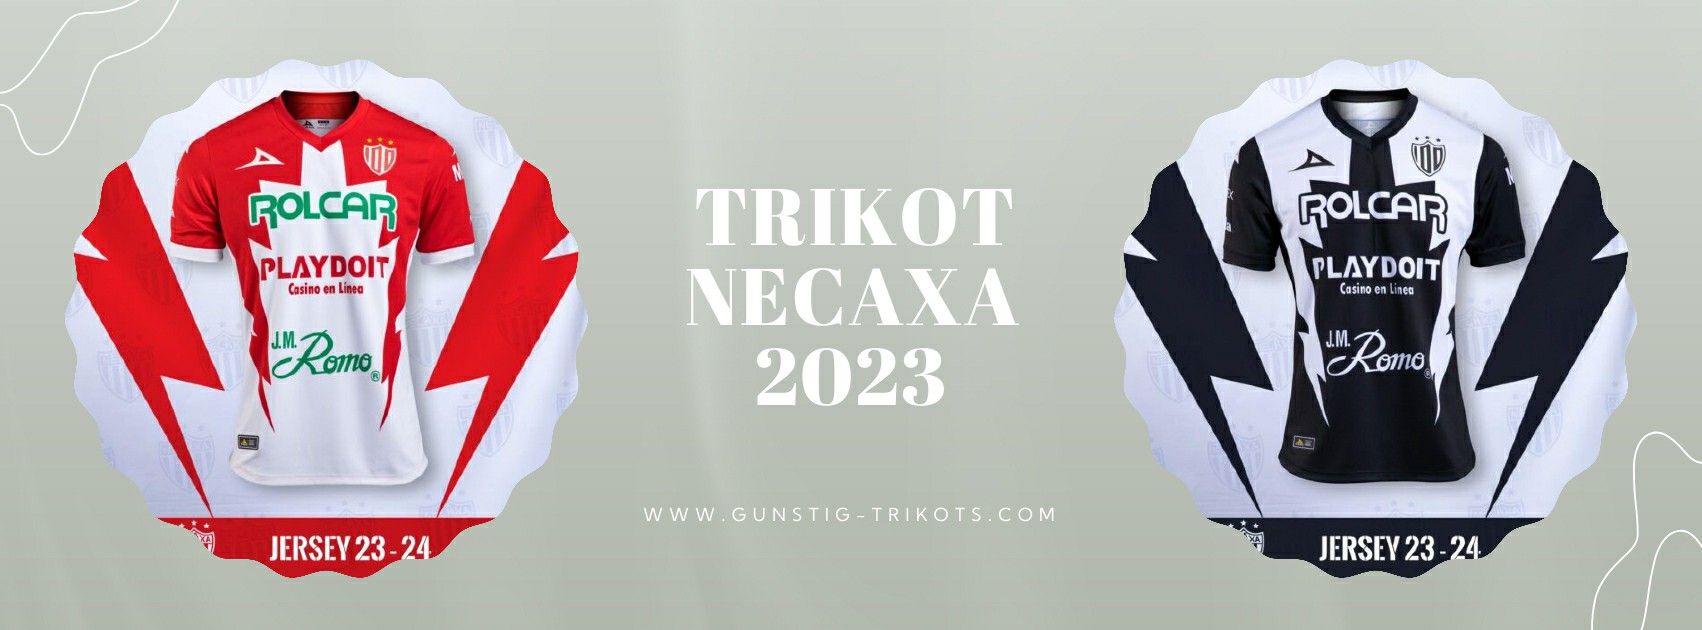 Necaxa Trikot 2023-2024